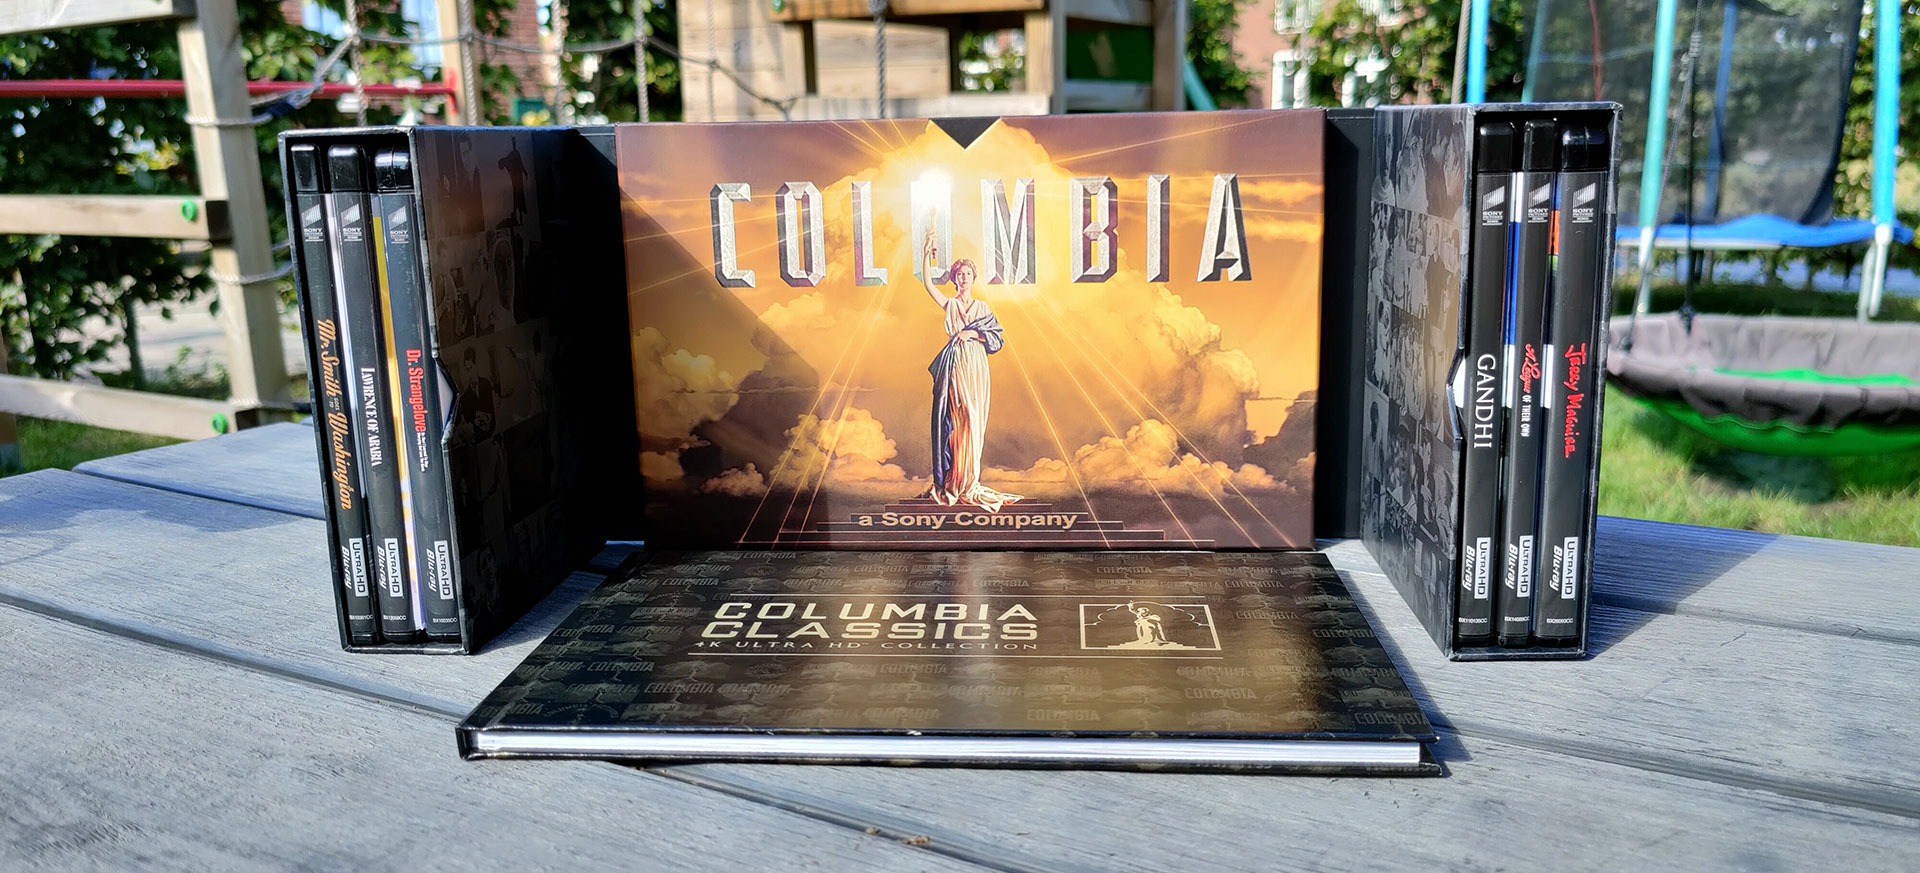 Columbia Classics Collection - Volume 1